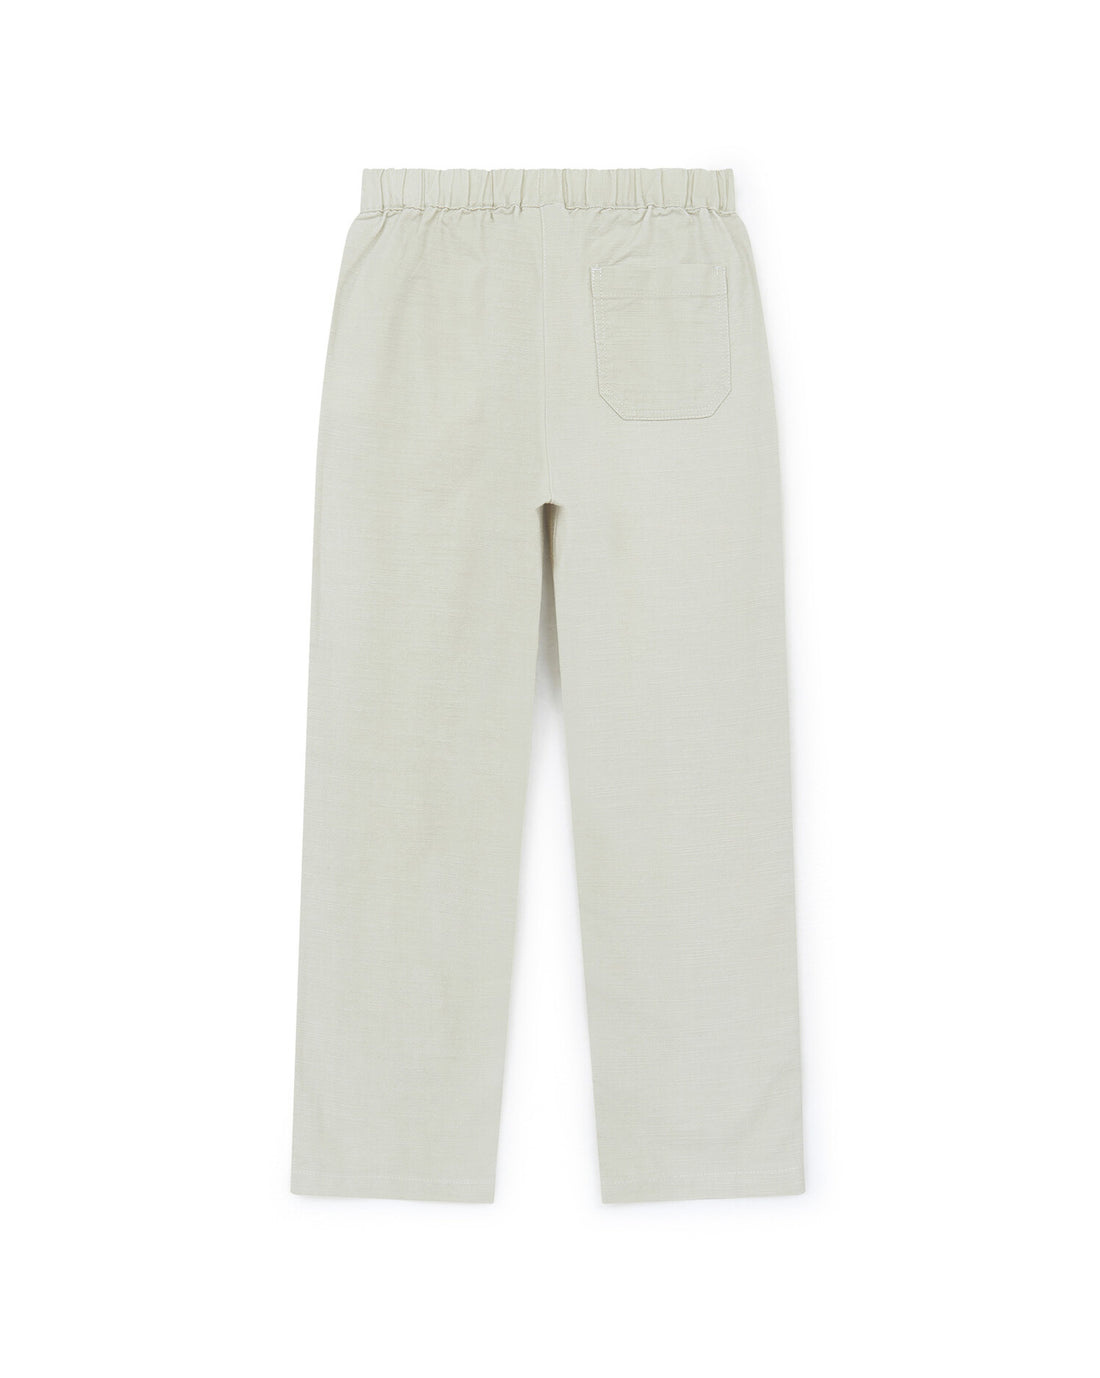 Bonton - light pants - beige